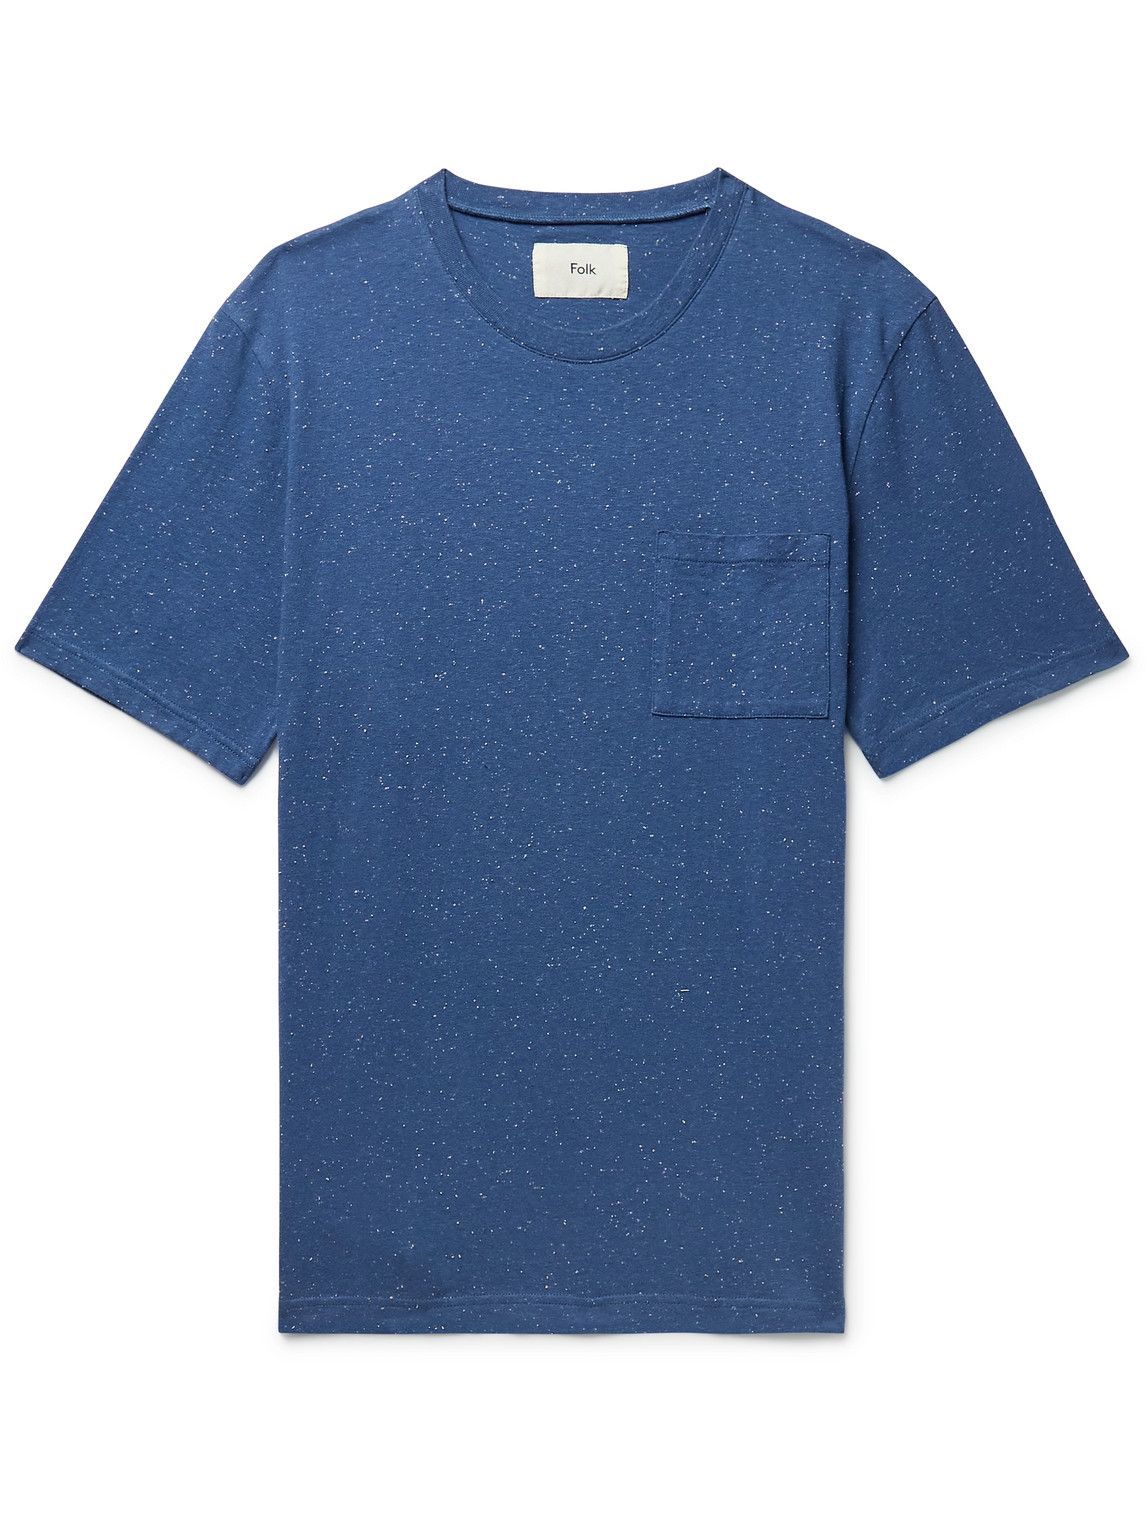 Folk - Assembly Nep Organic Cotton-Blend Jersey T-Shirt - Blue Folk